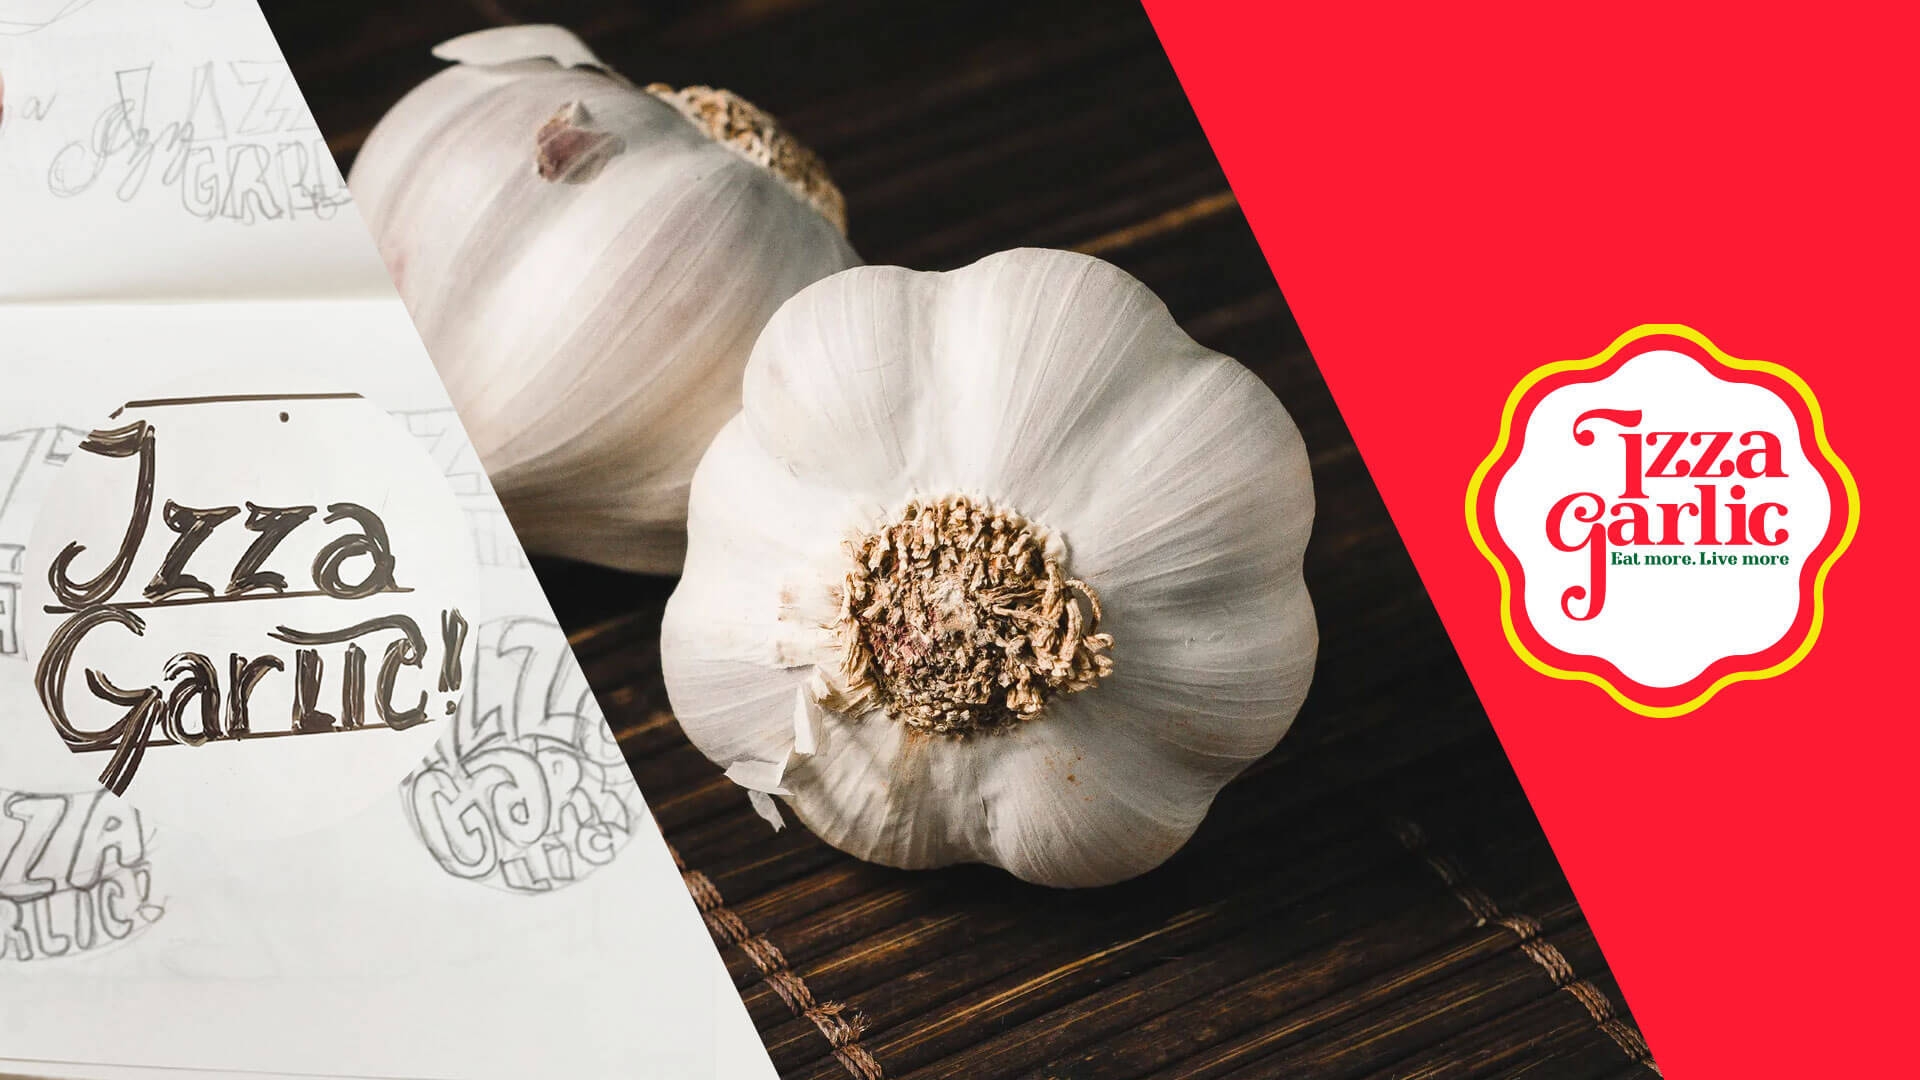 Izza Garlic - Logo based on the garlic